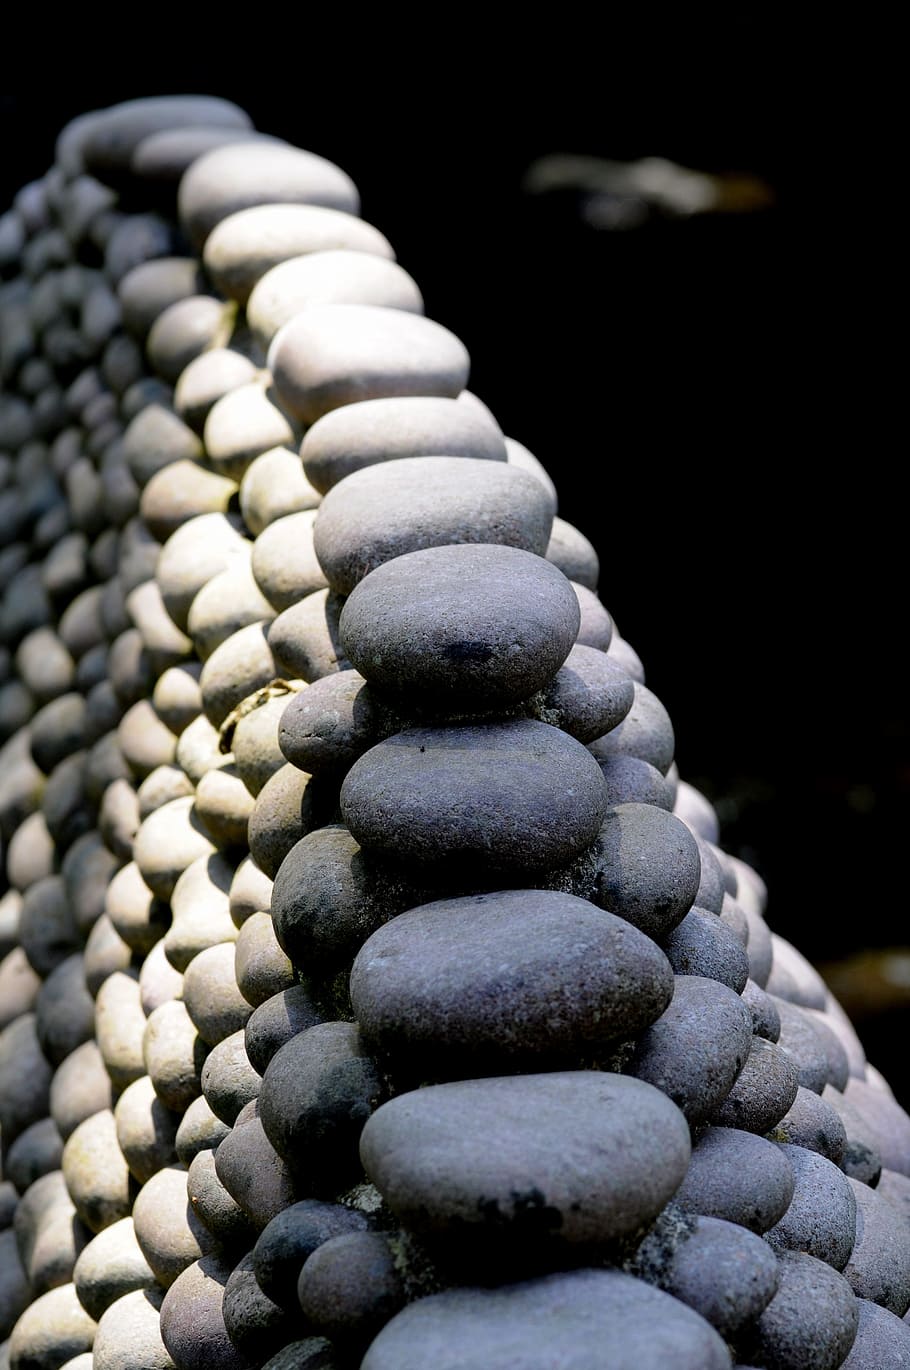 albert kahn garden, japanese garden, boulogne-billancourt, stones, nature, zen, stone - object, pebble, rock, solid